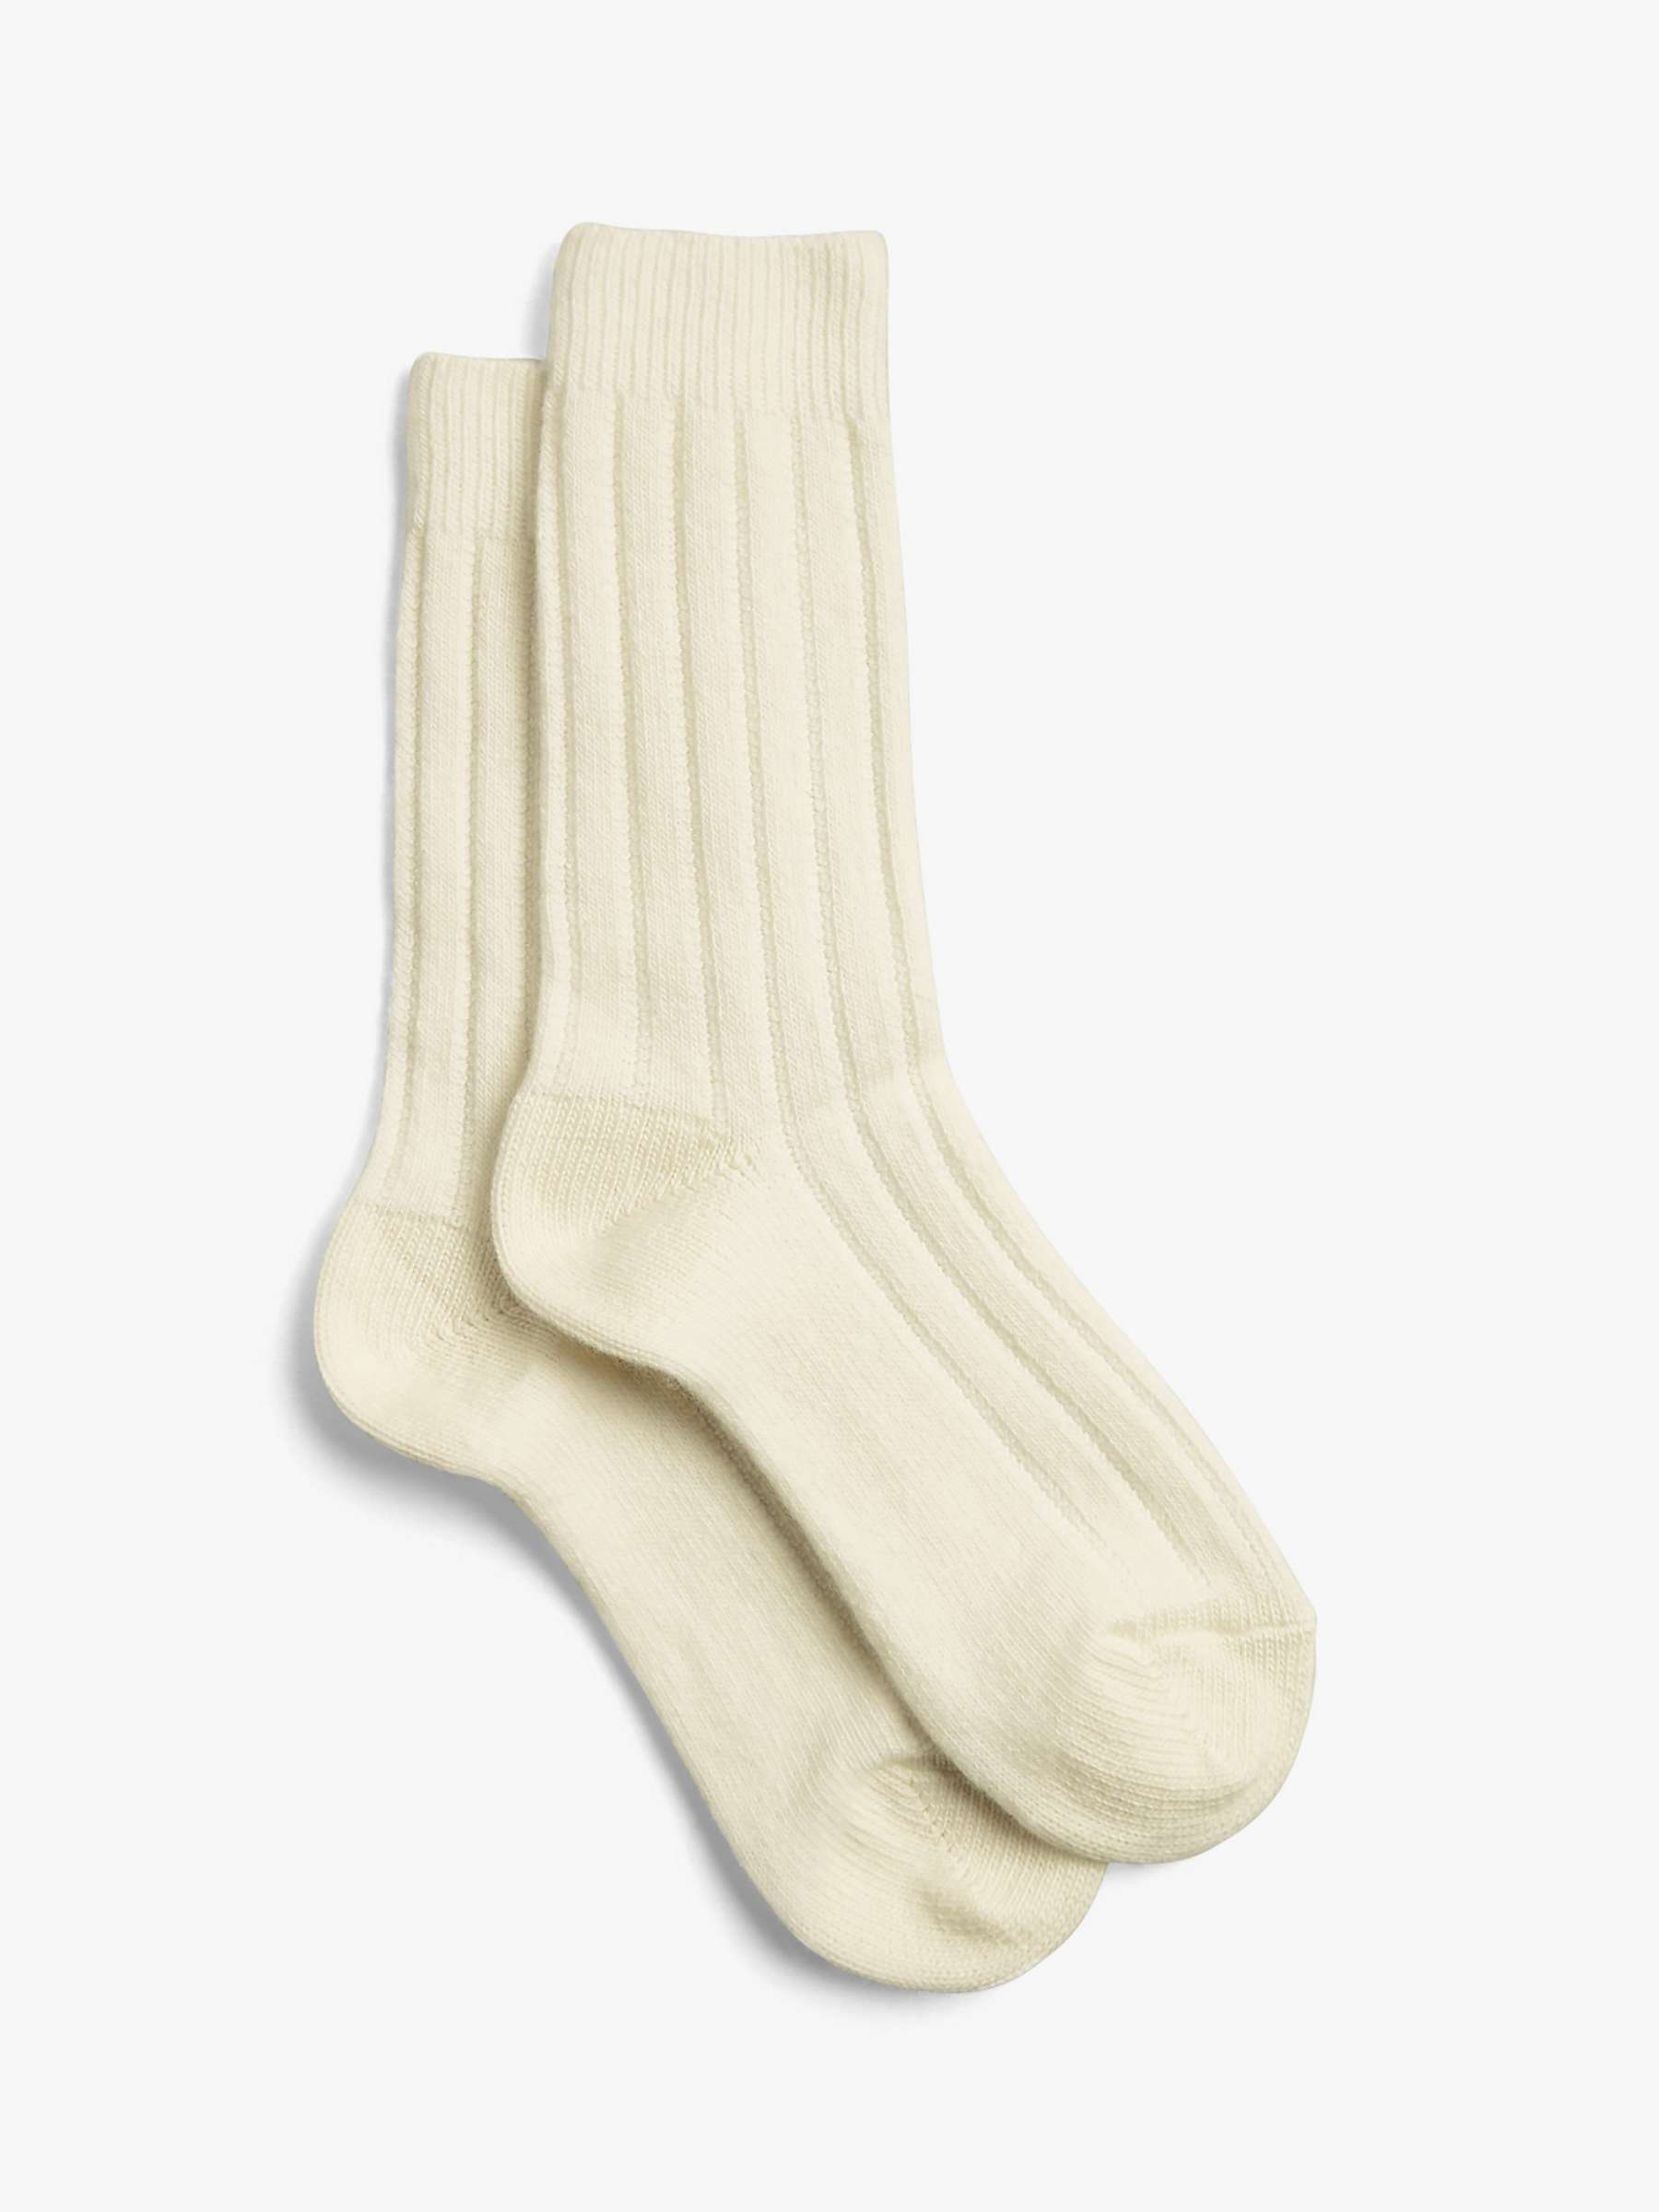 Buy HUSH Murica Cashmere Blend Ribbed Socks Online at johnlewis.com